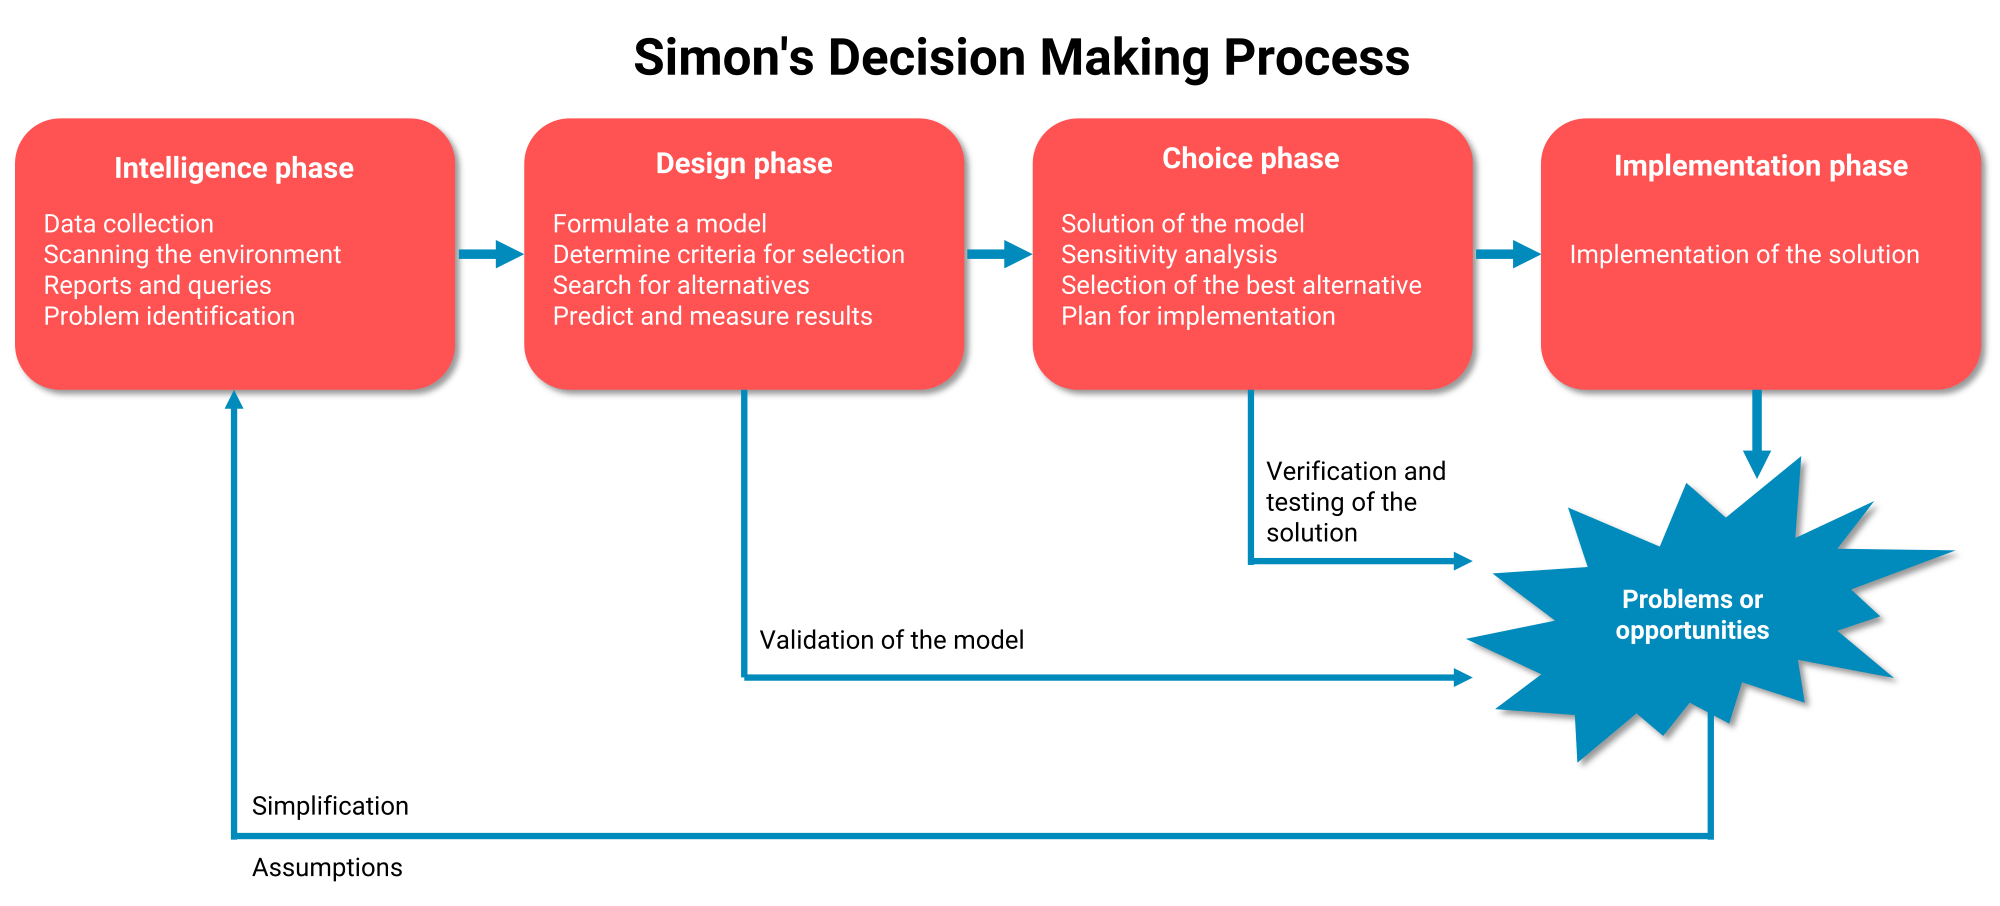 Simon's decision making process